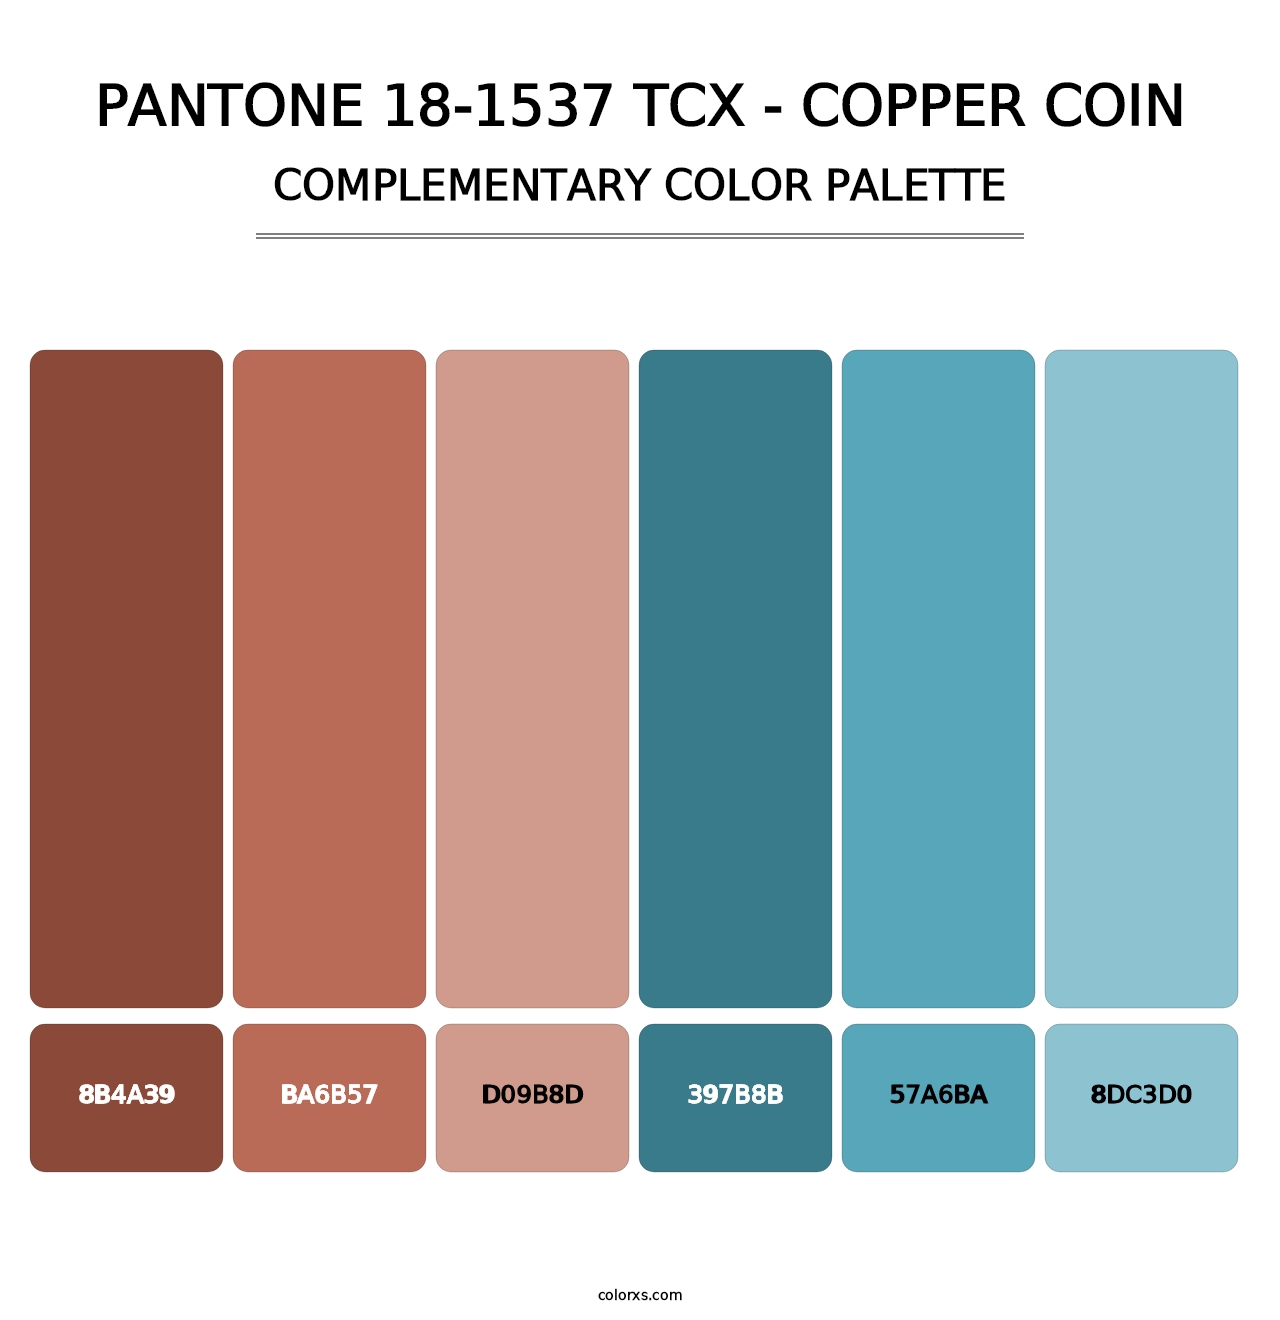 PANTONE 18-1537 TCX - Copper Coin - Complementary Color Palette